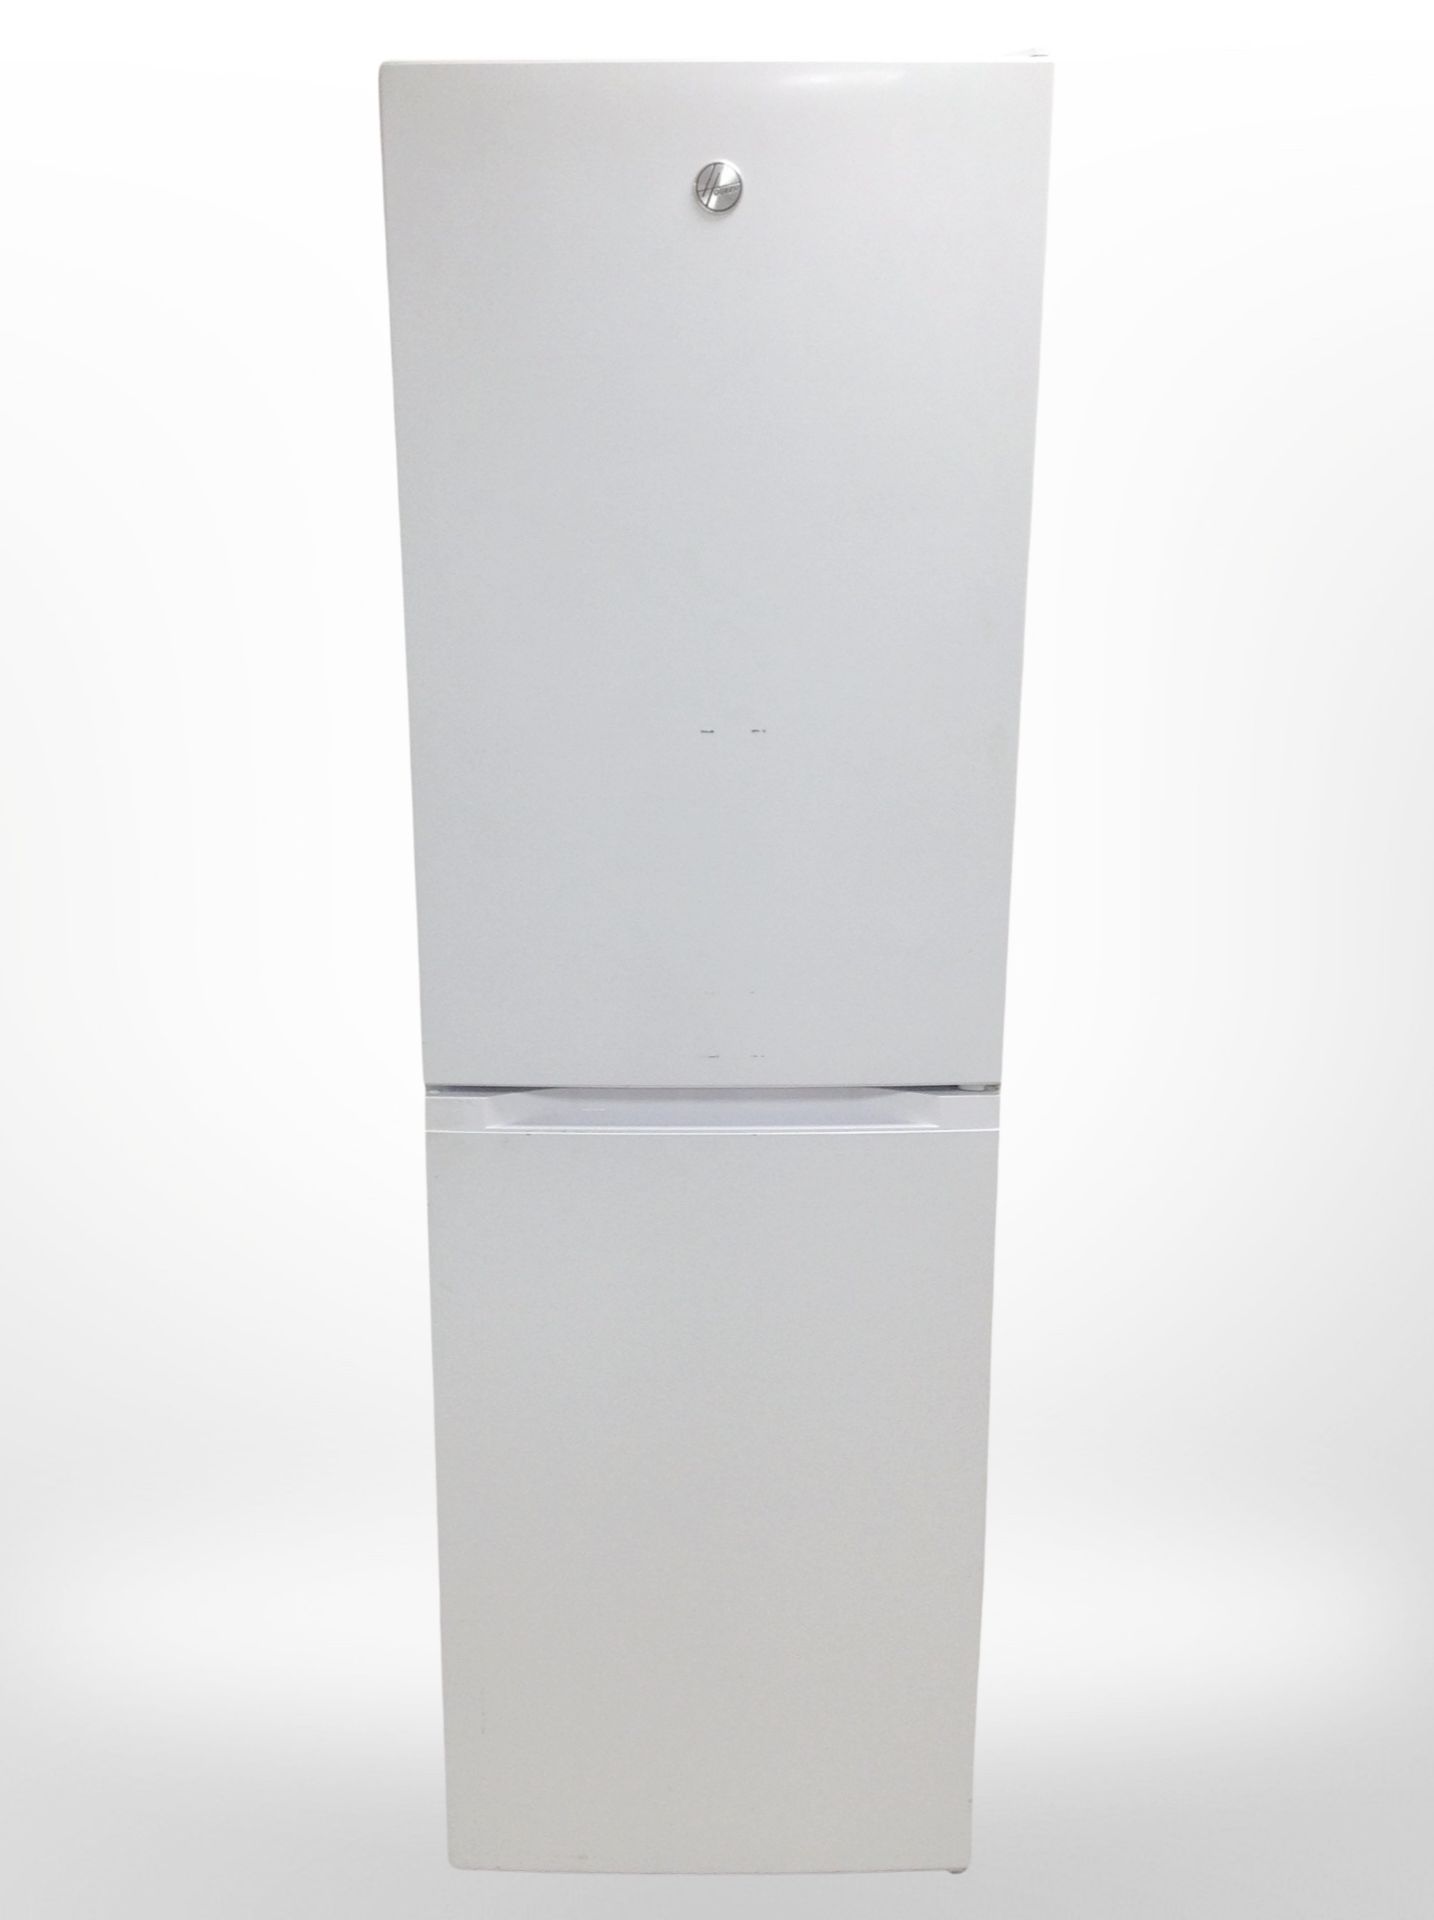 A Hoover upright fridge-freezer.